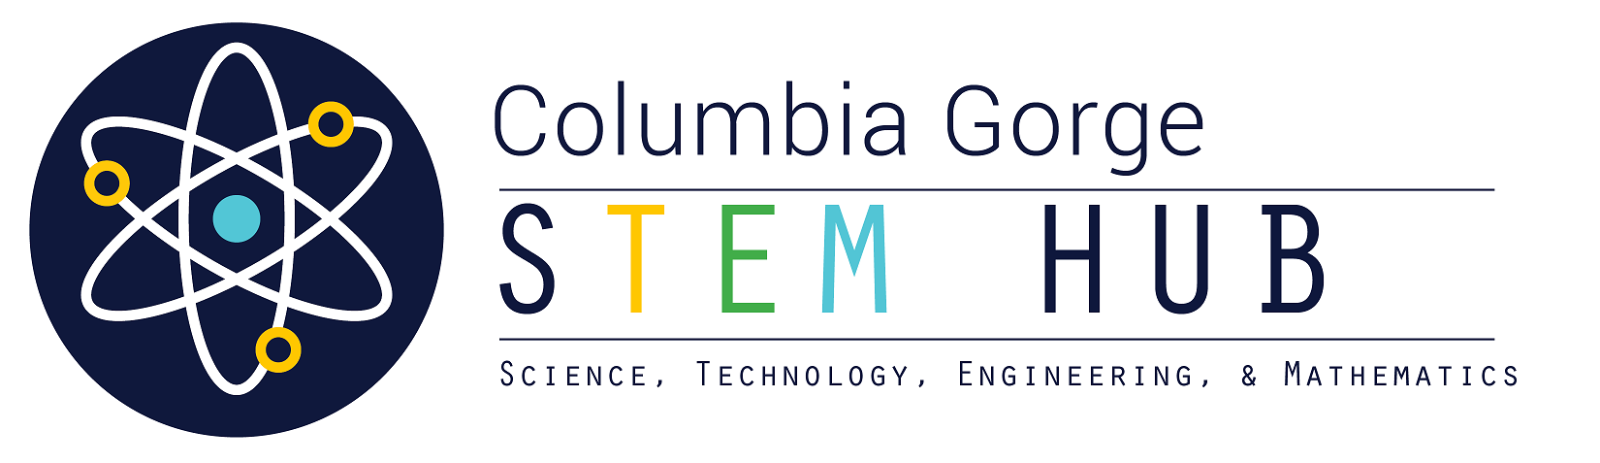 Columbia%20Gorge%20STEM%20Hub_logo.png